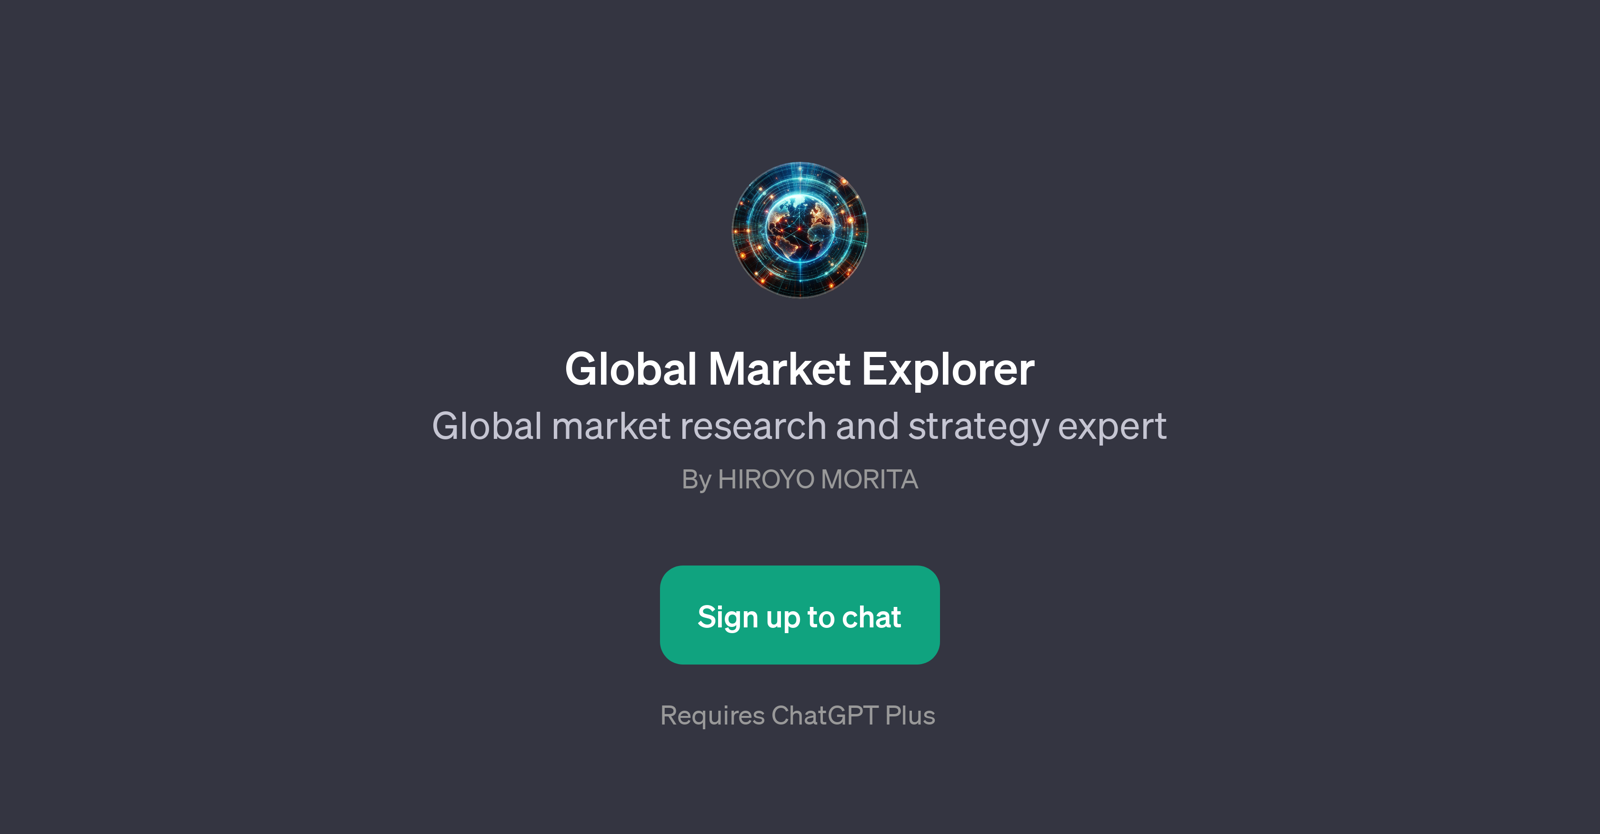 Global Market Explorer website